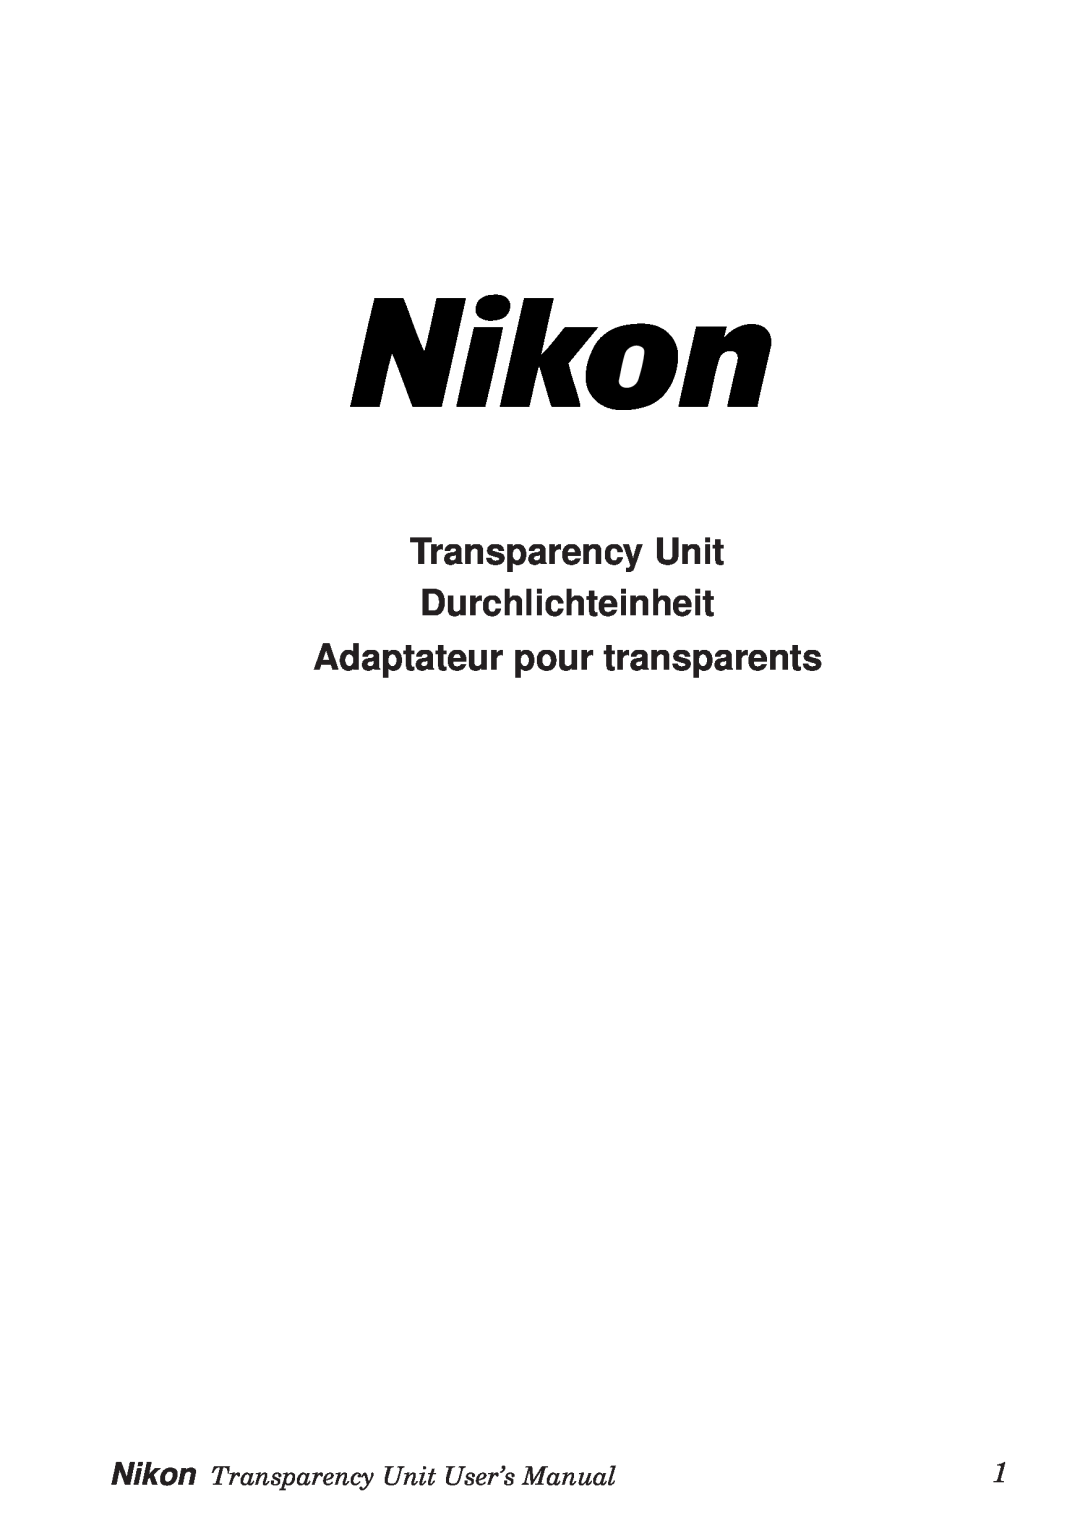 Nikon manual Transparency Unit Durchlichteinheit Adaptateur pour transparents, Nikon Transparency Unit User’s Manual 